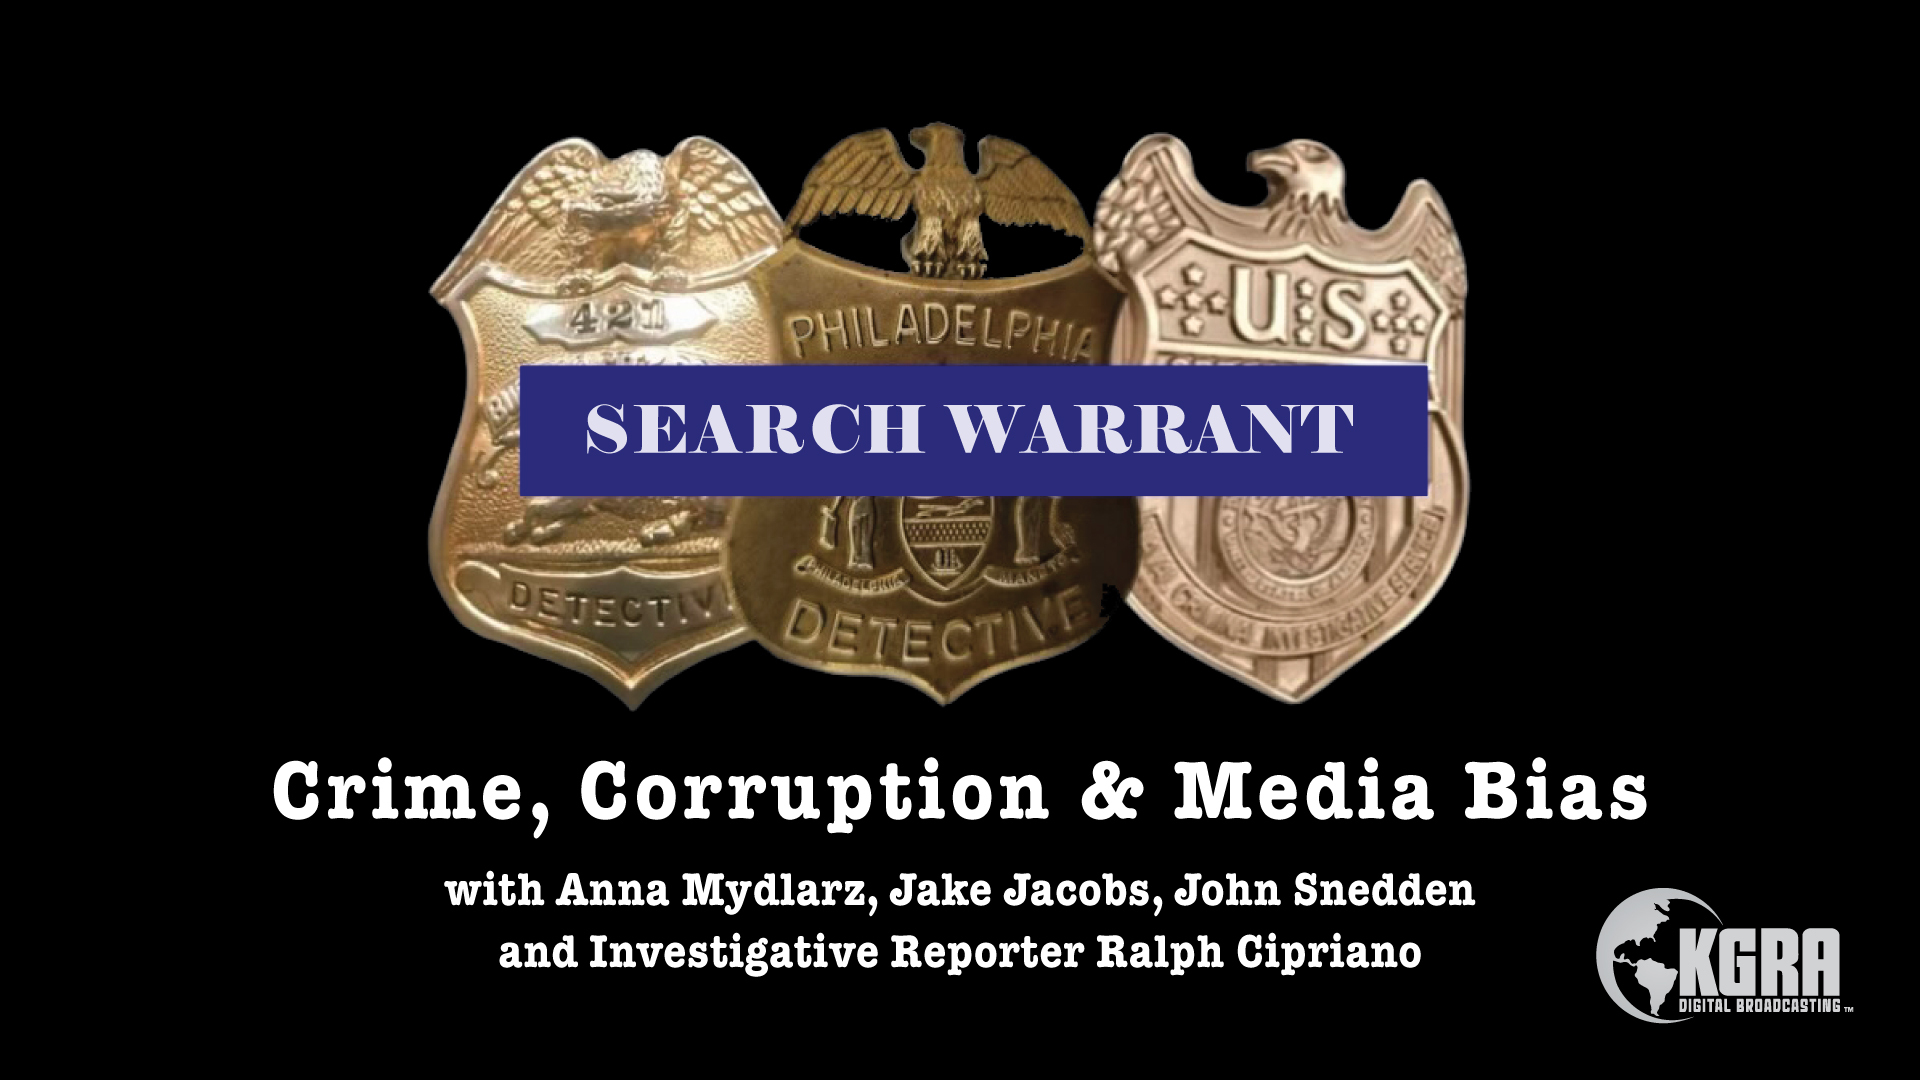 Search Warrant - Crime, Corruption & Media Bias - KGRA Digital Broadcasting